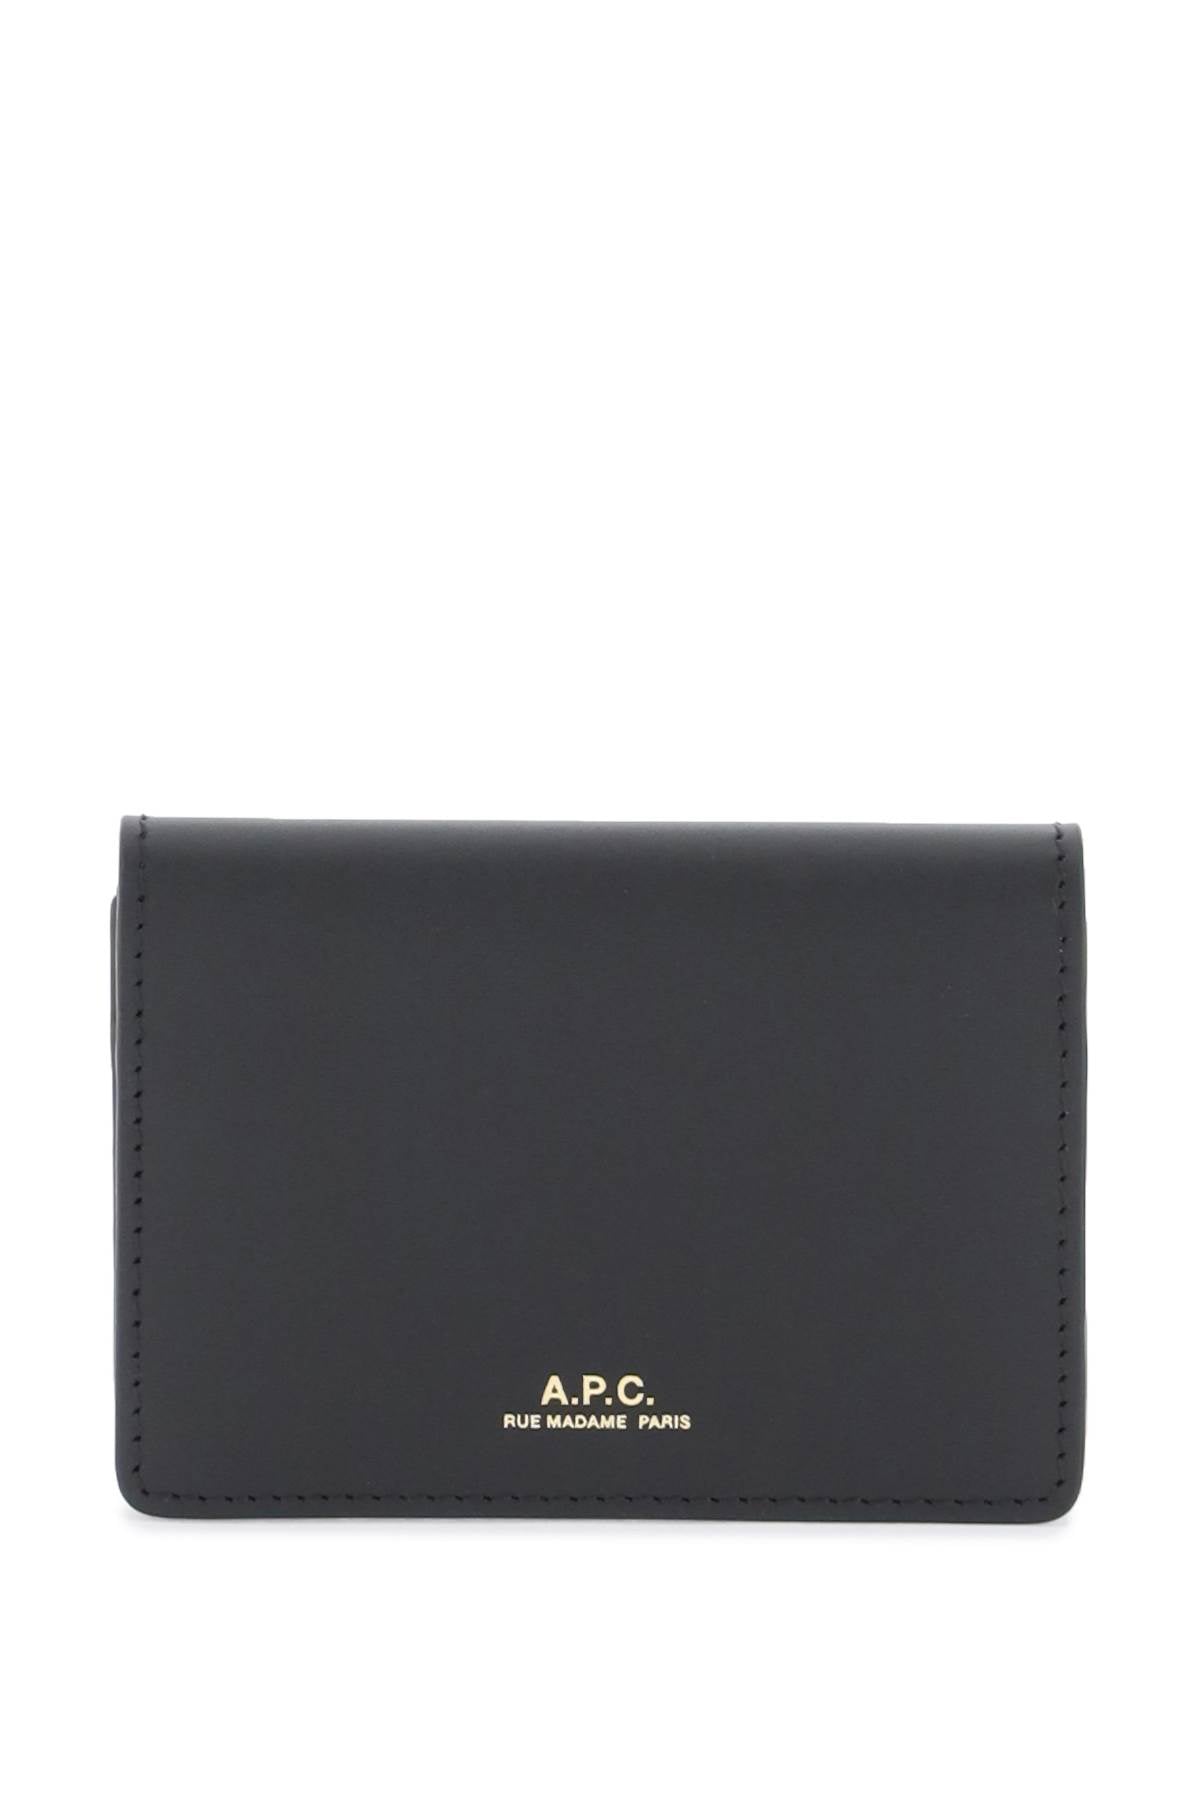 A.P.C. A.p.c. leather stefan card holder